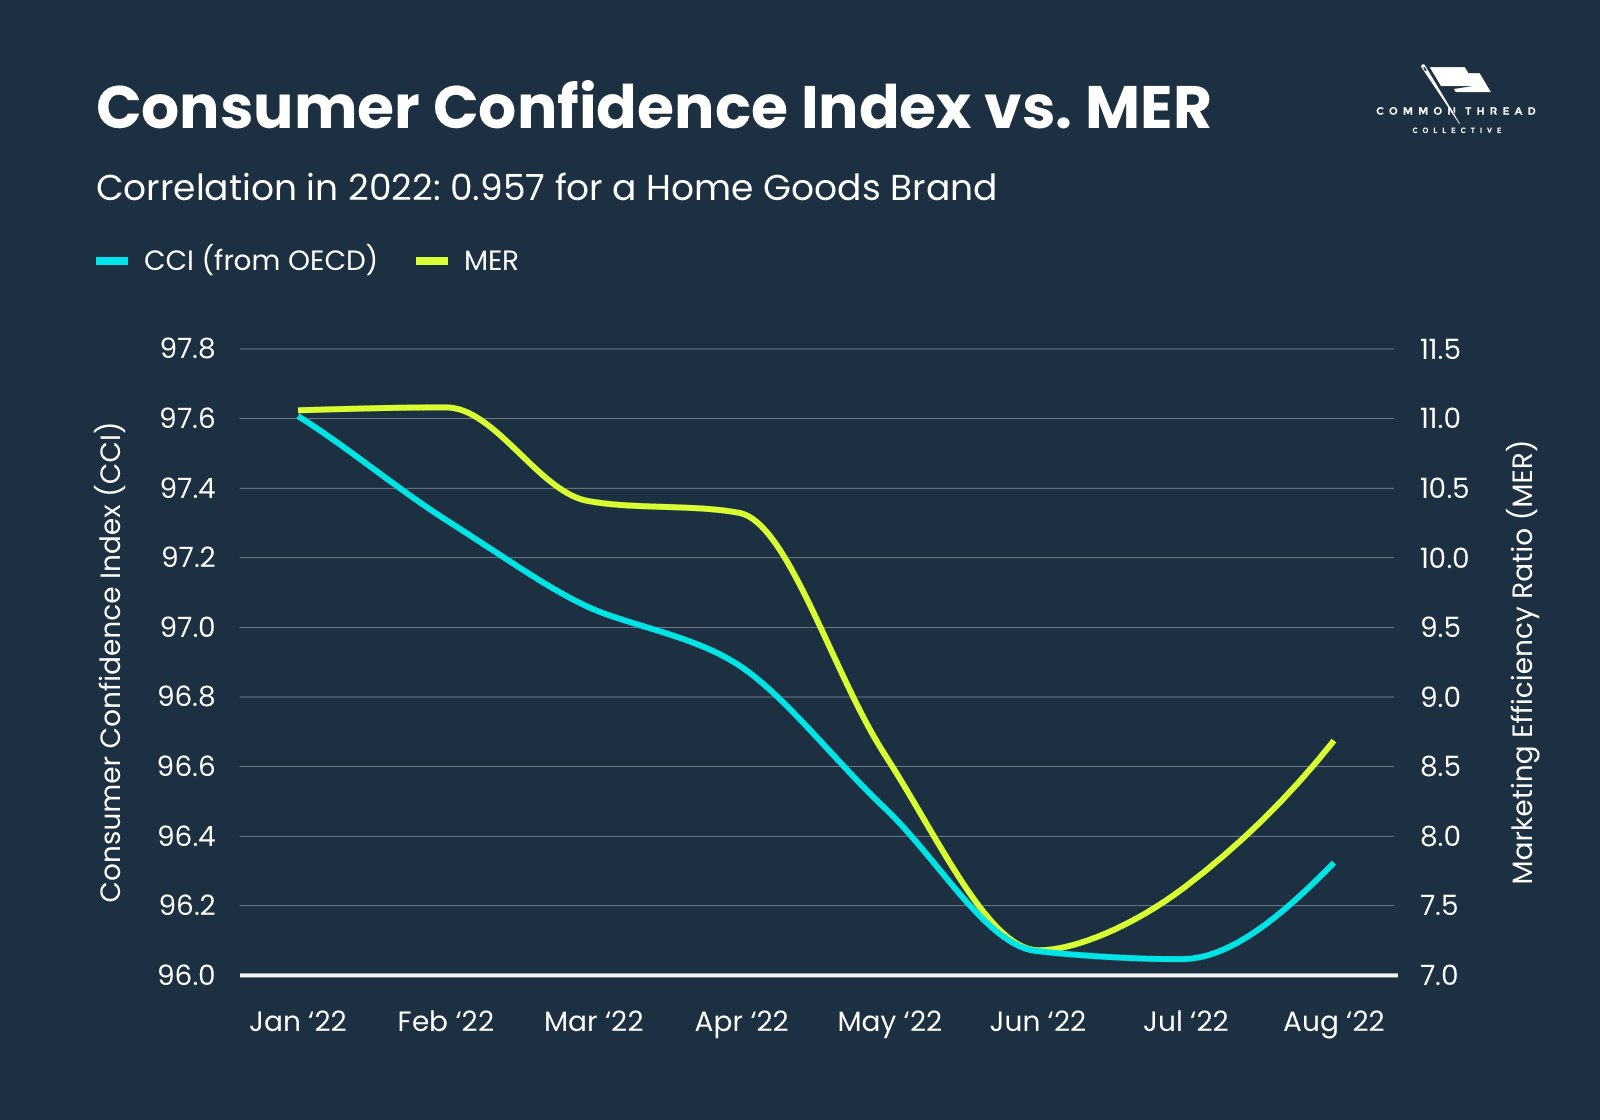 consumer confidence index vs. MER for a home goods brand